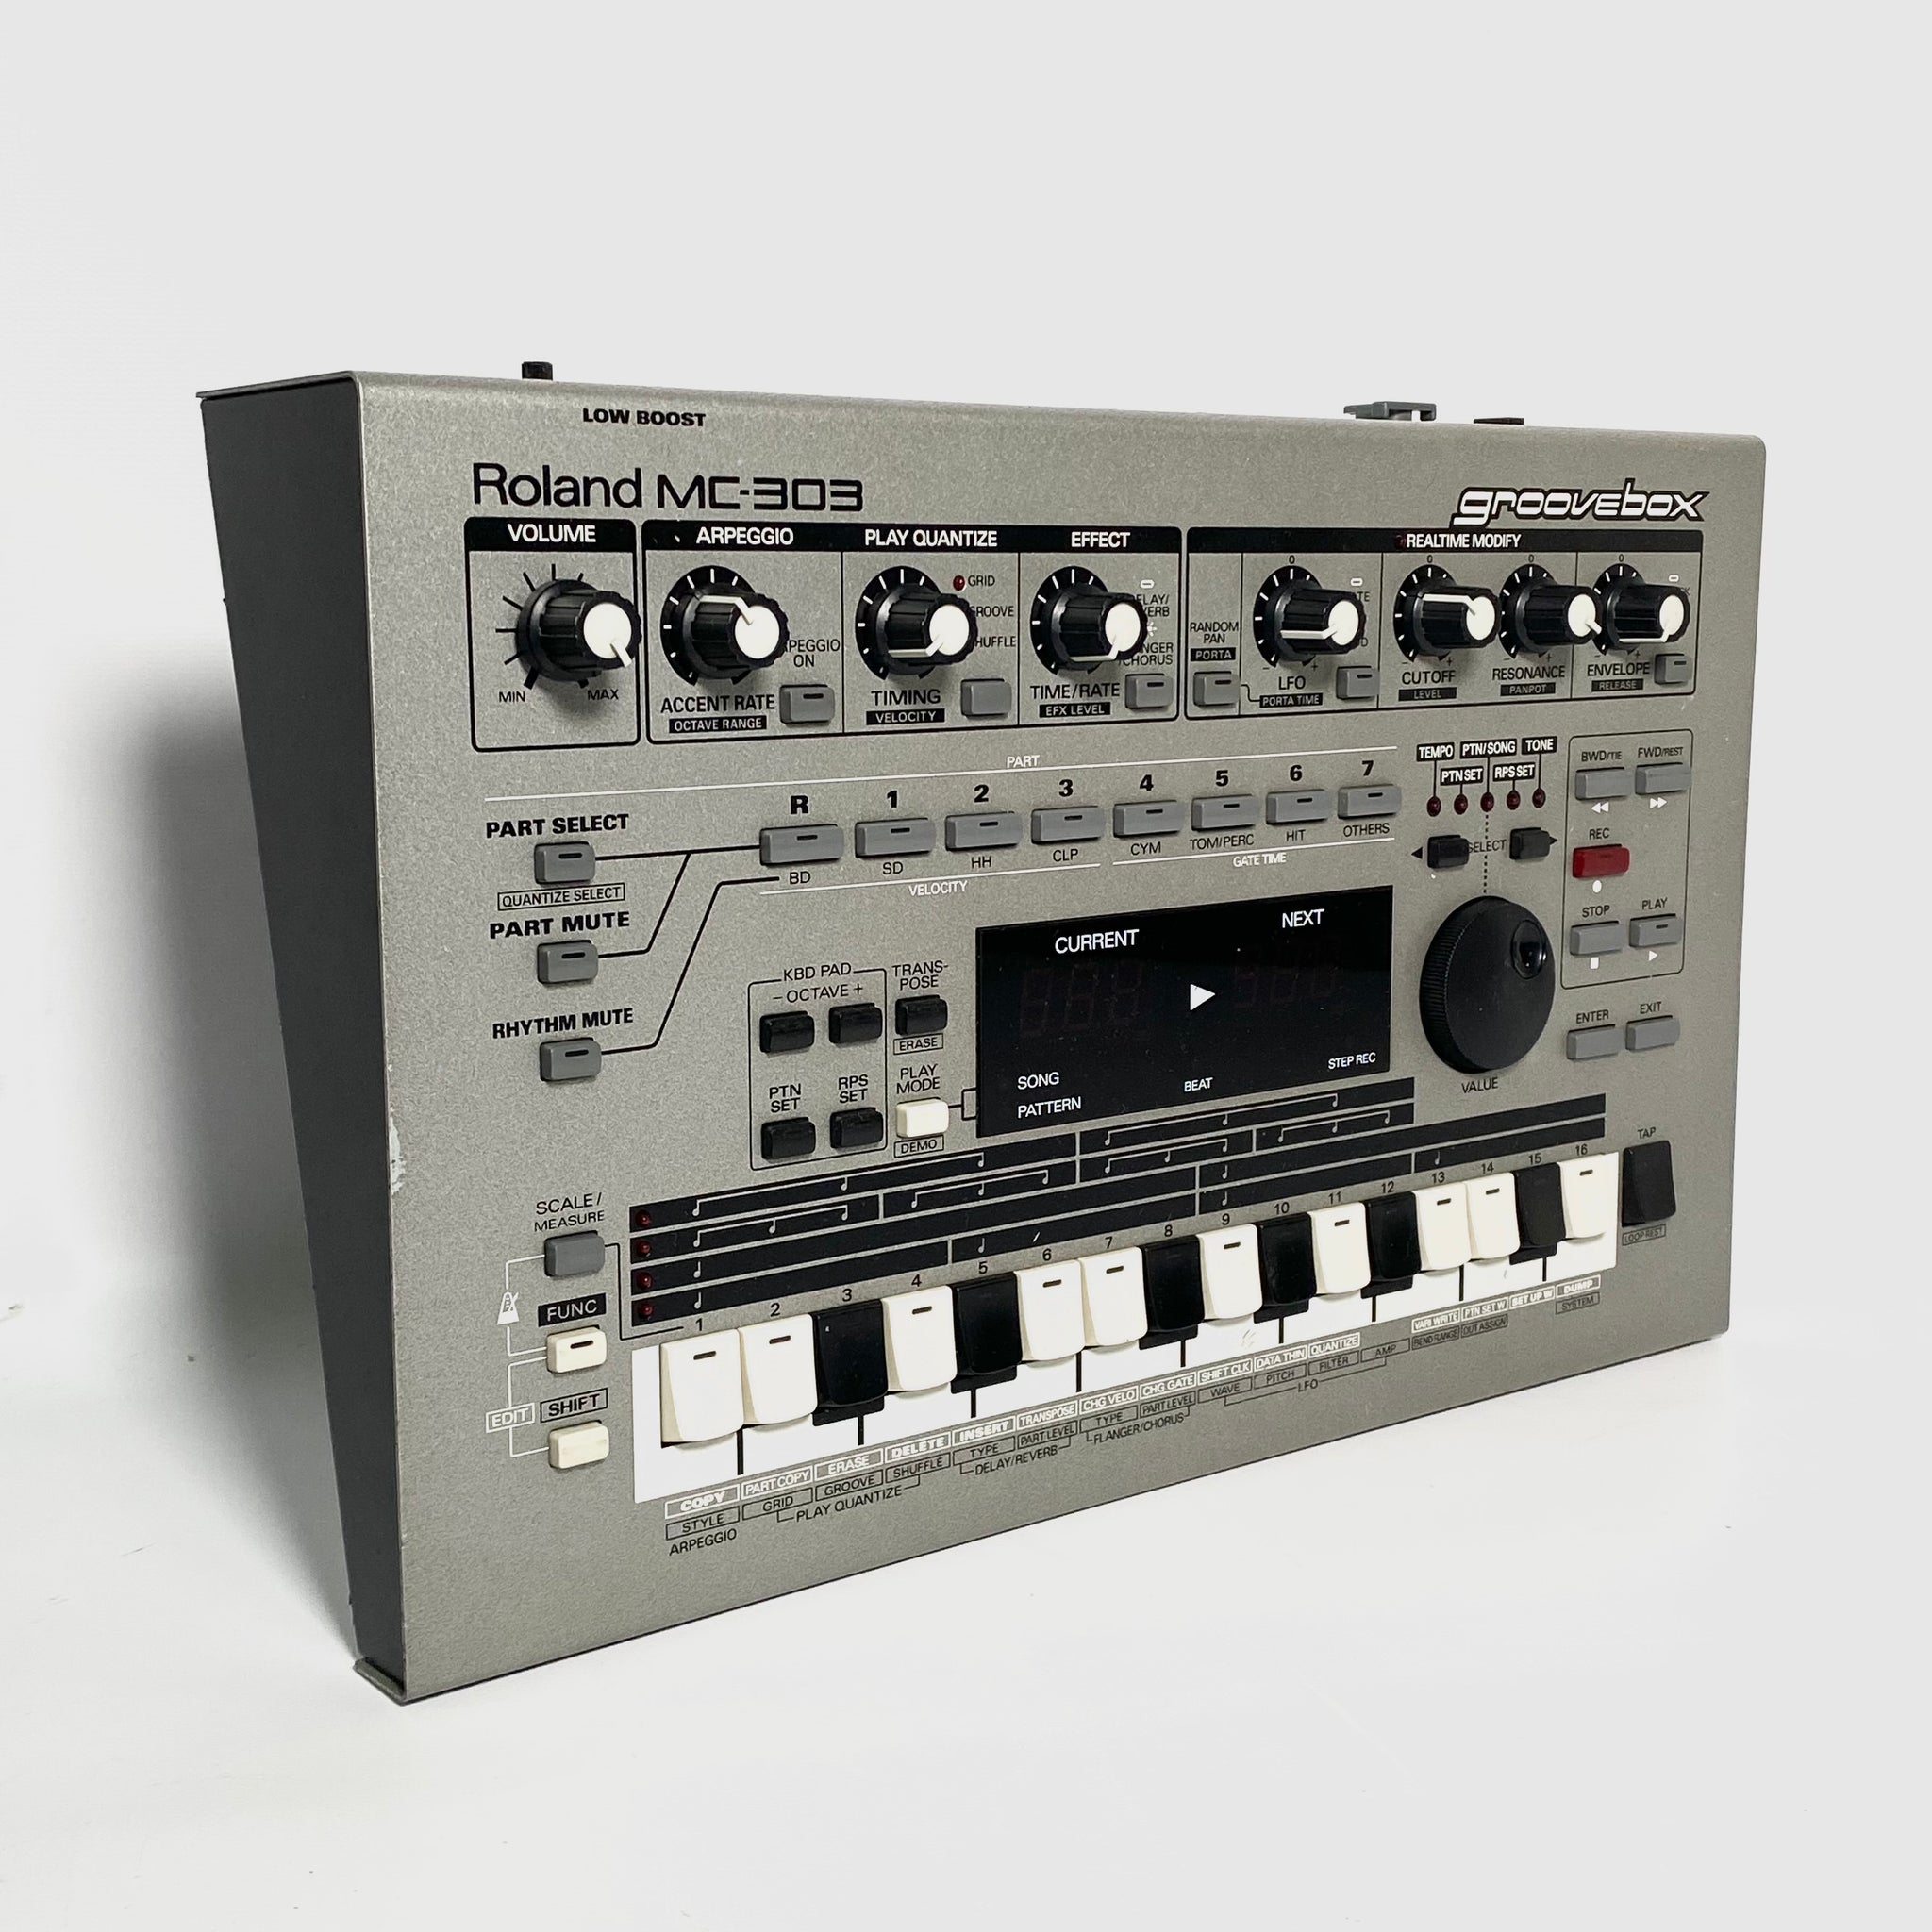 Roland MC-303 – Switched On Austin